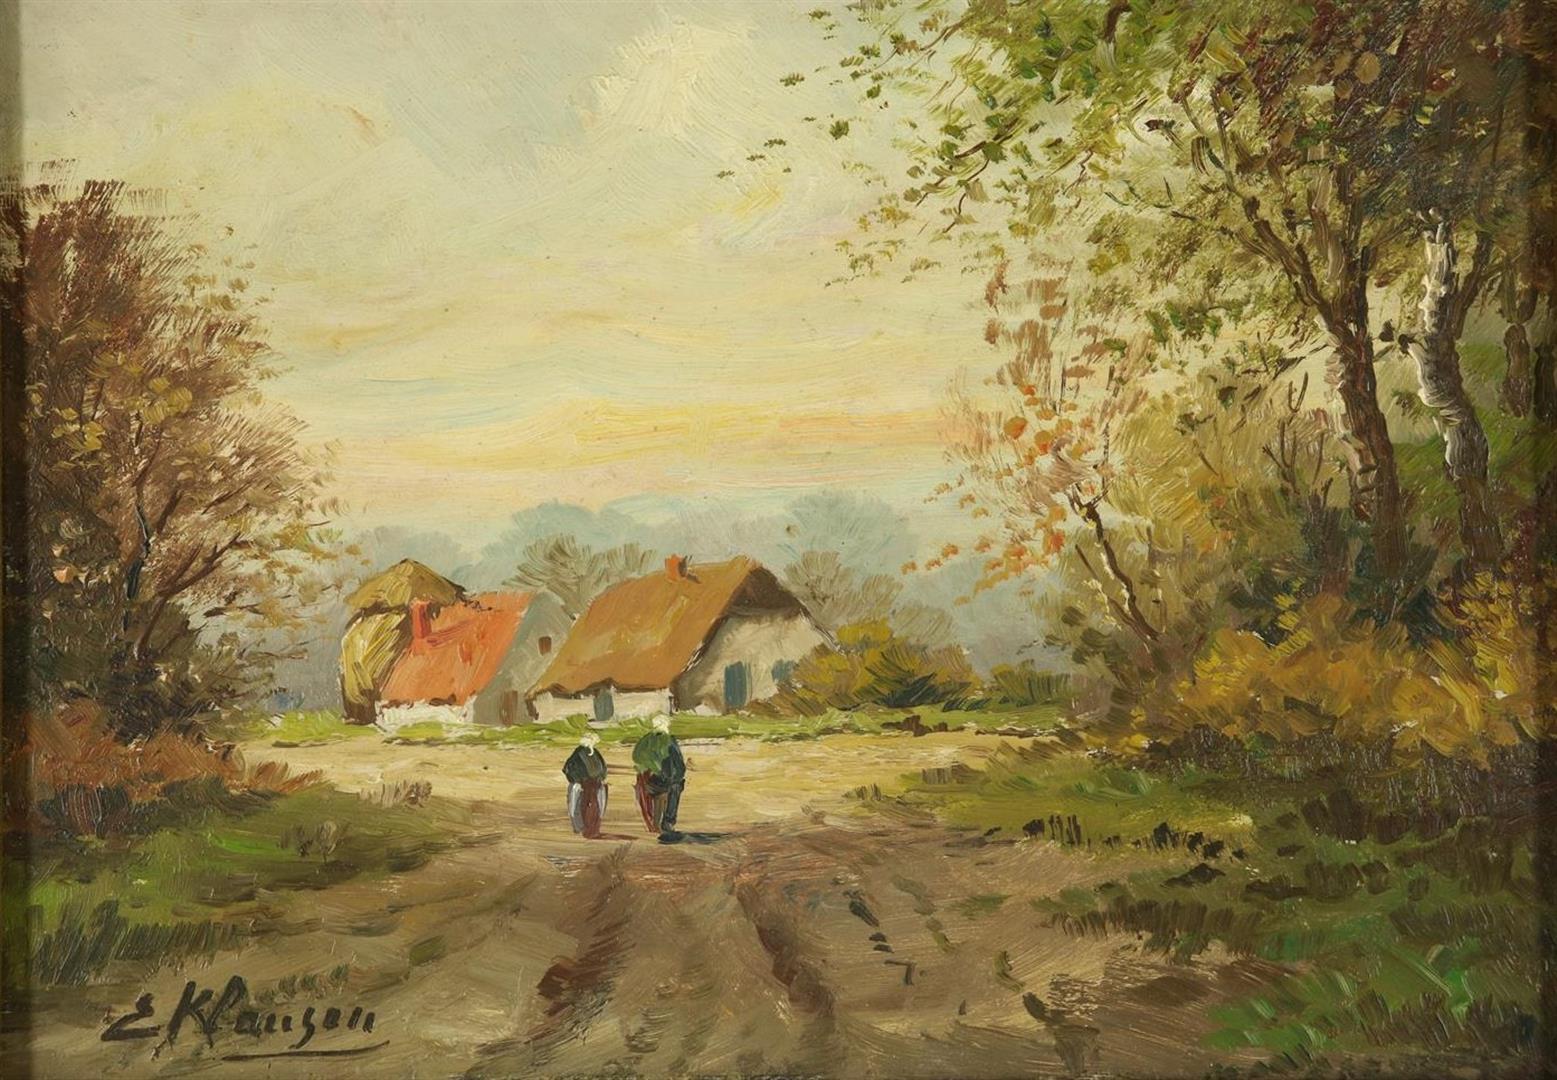 Landscape with figures, signed lower left E. Klaassen, Twente painter, approx 1930, oil on